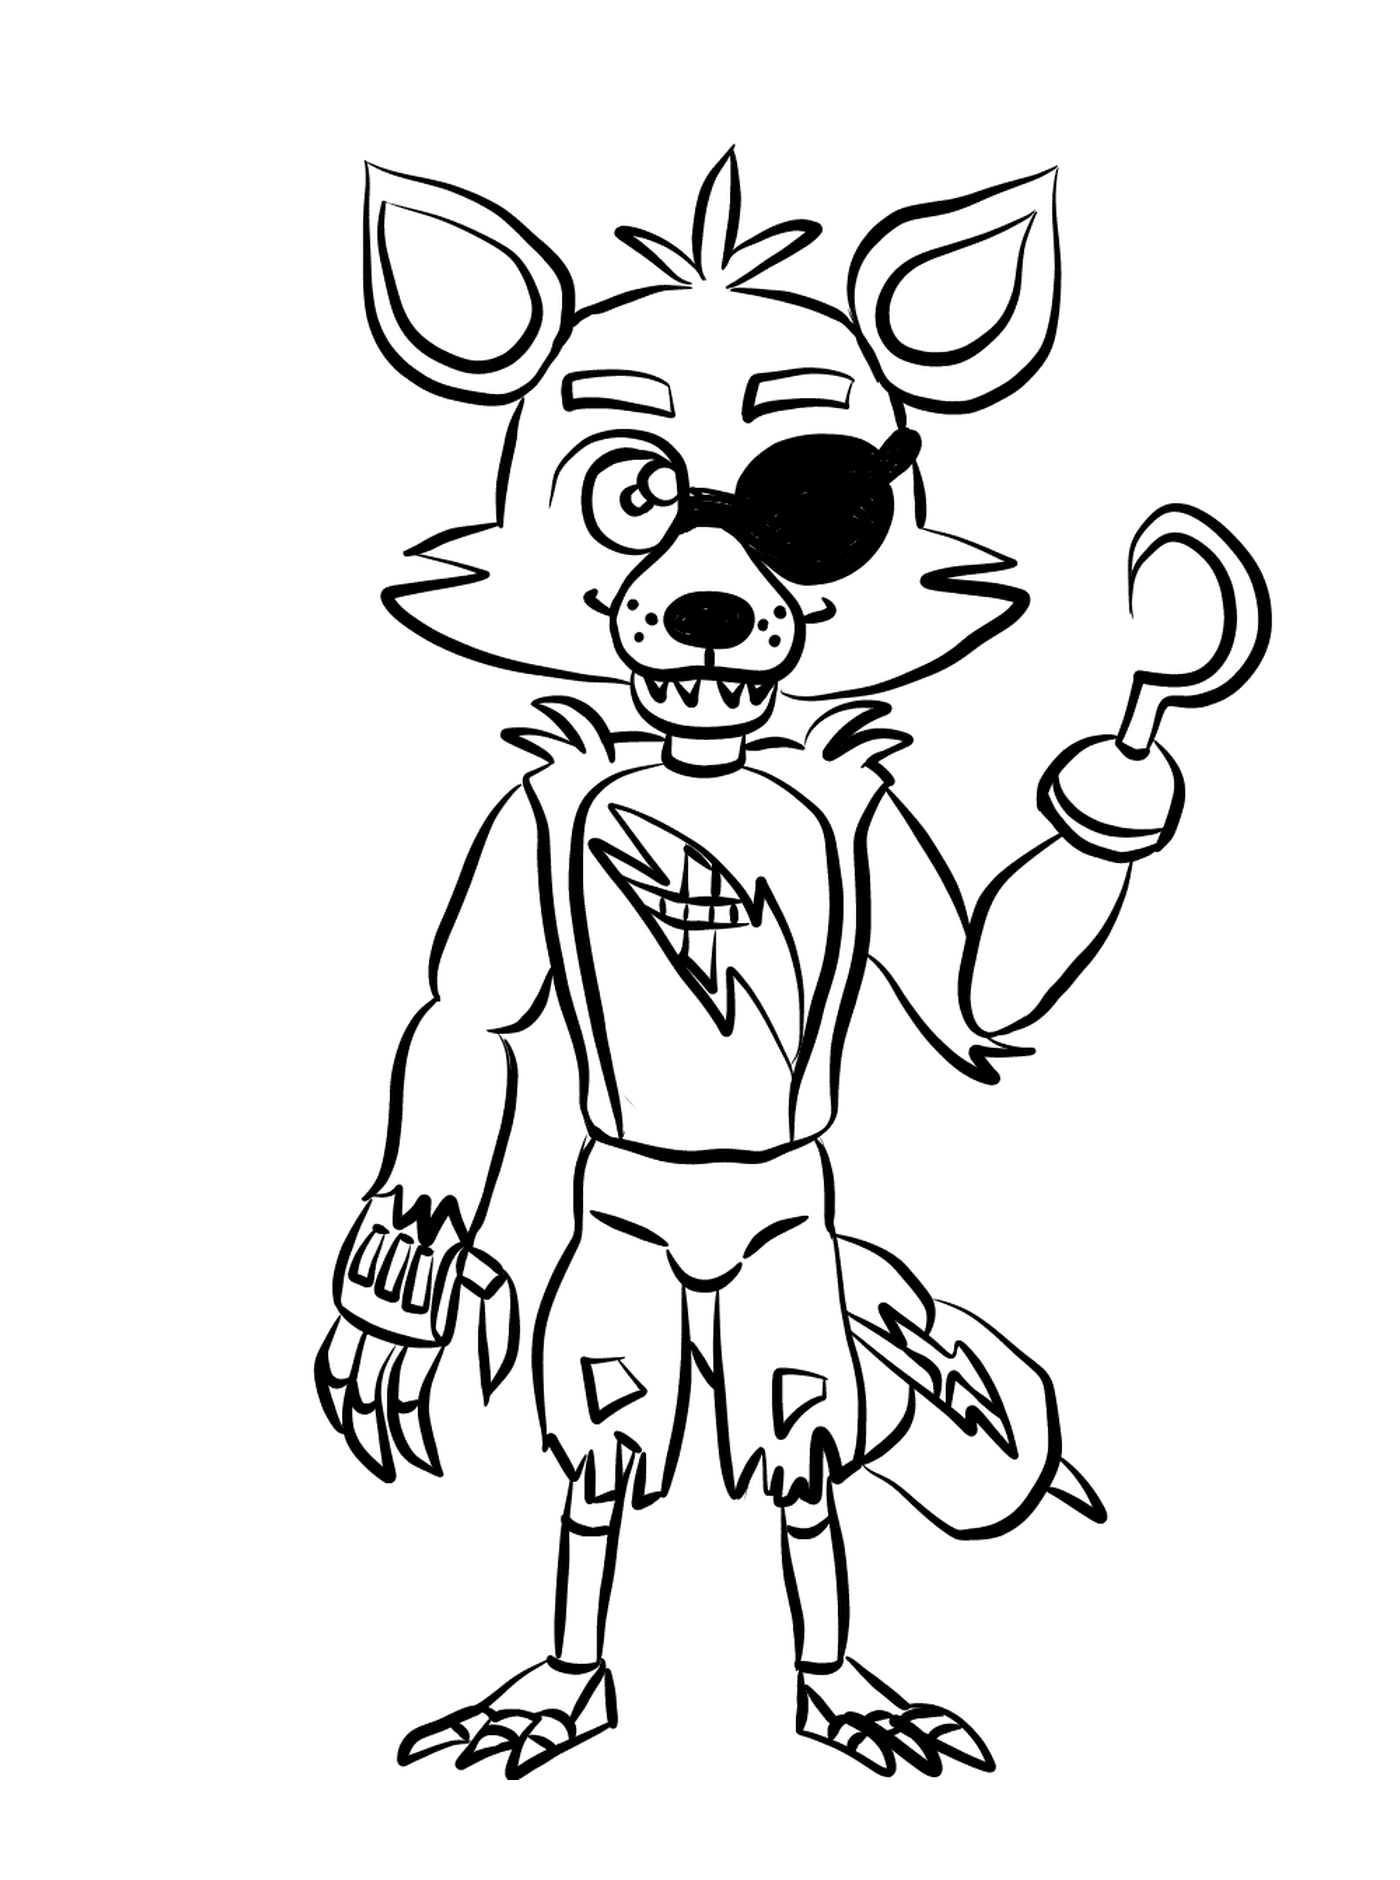  A cartoon character representing Foxy 